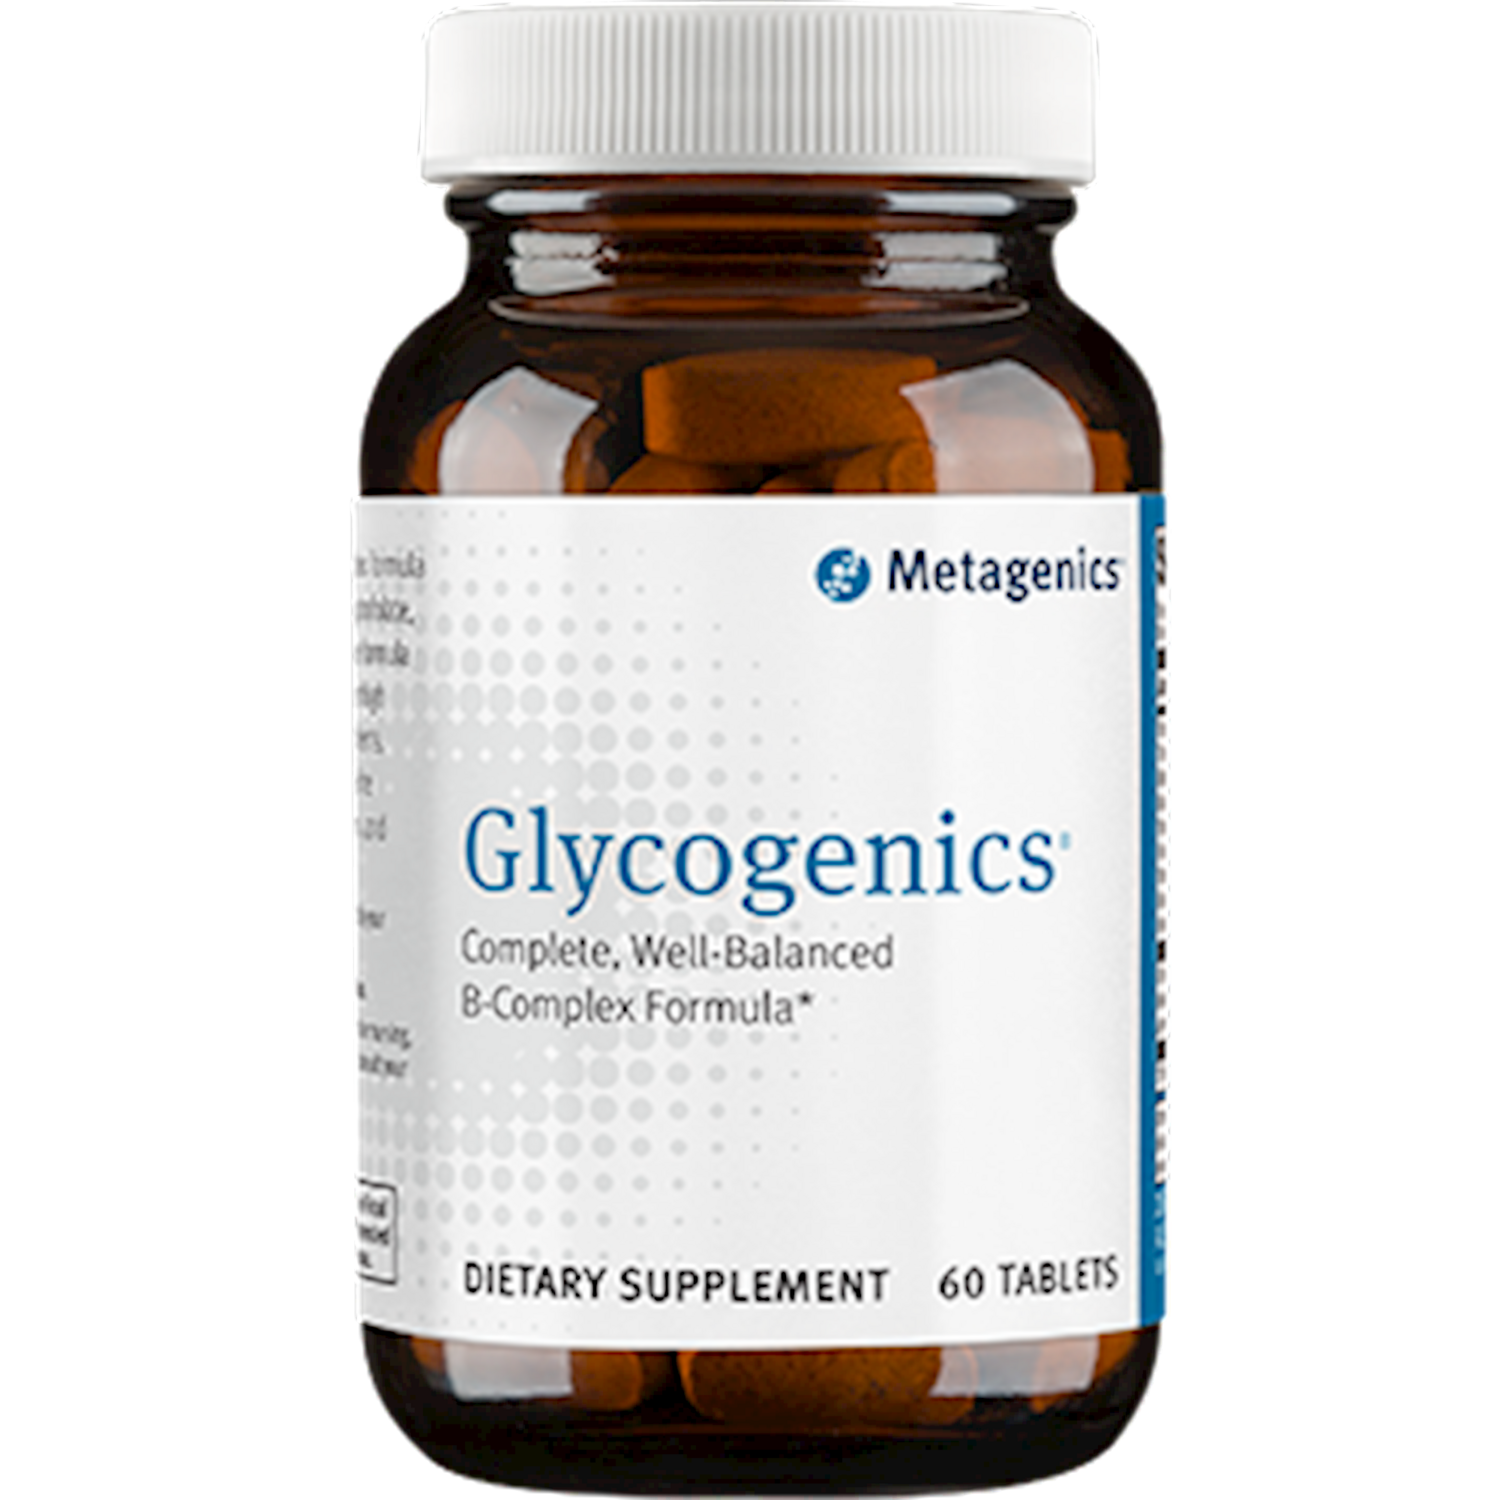 Glycogenics 60 tablets Metagenics